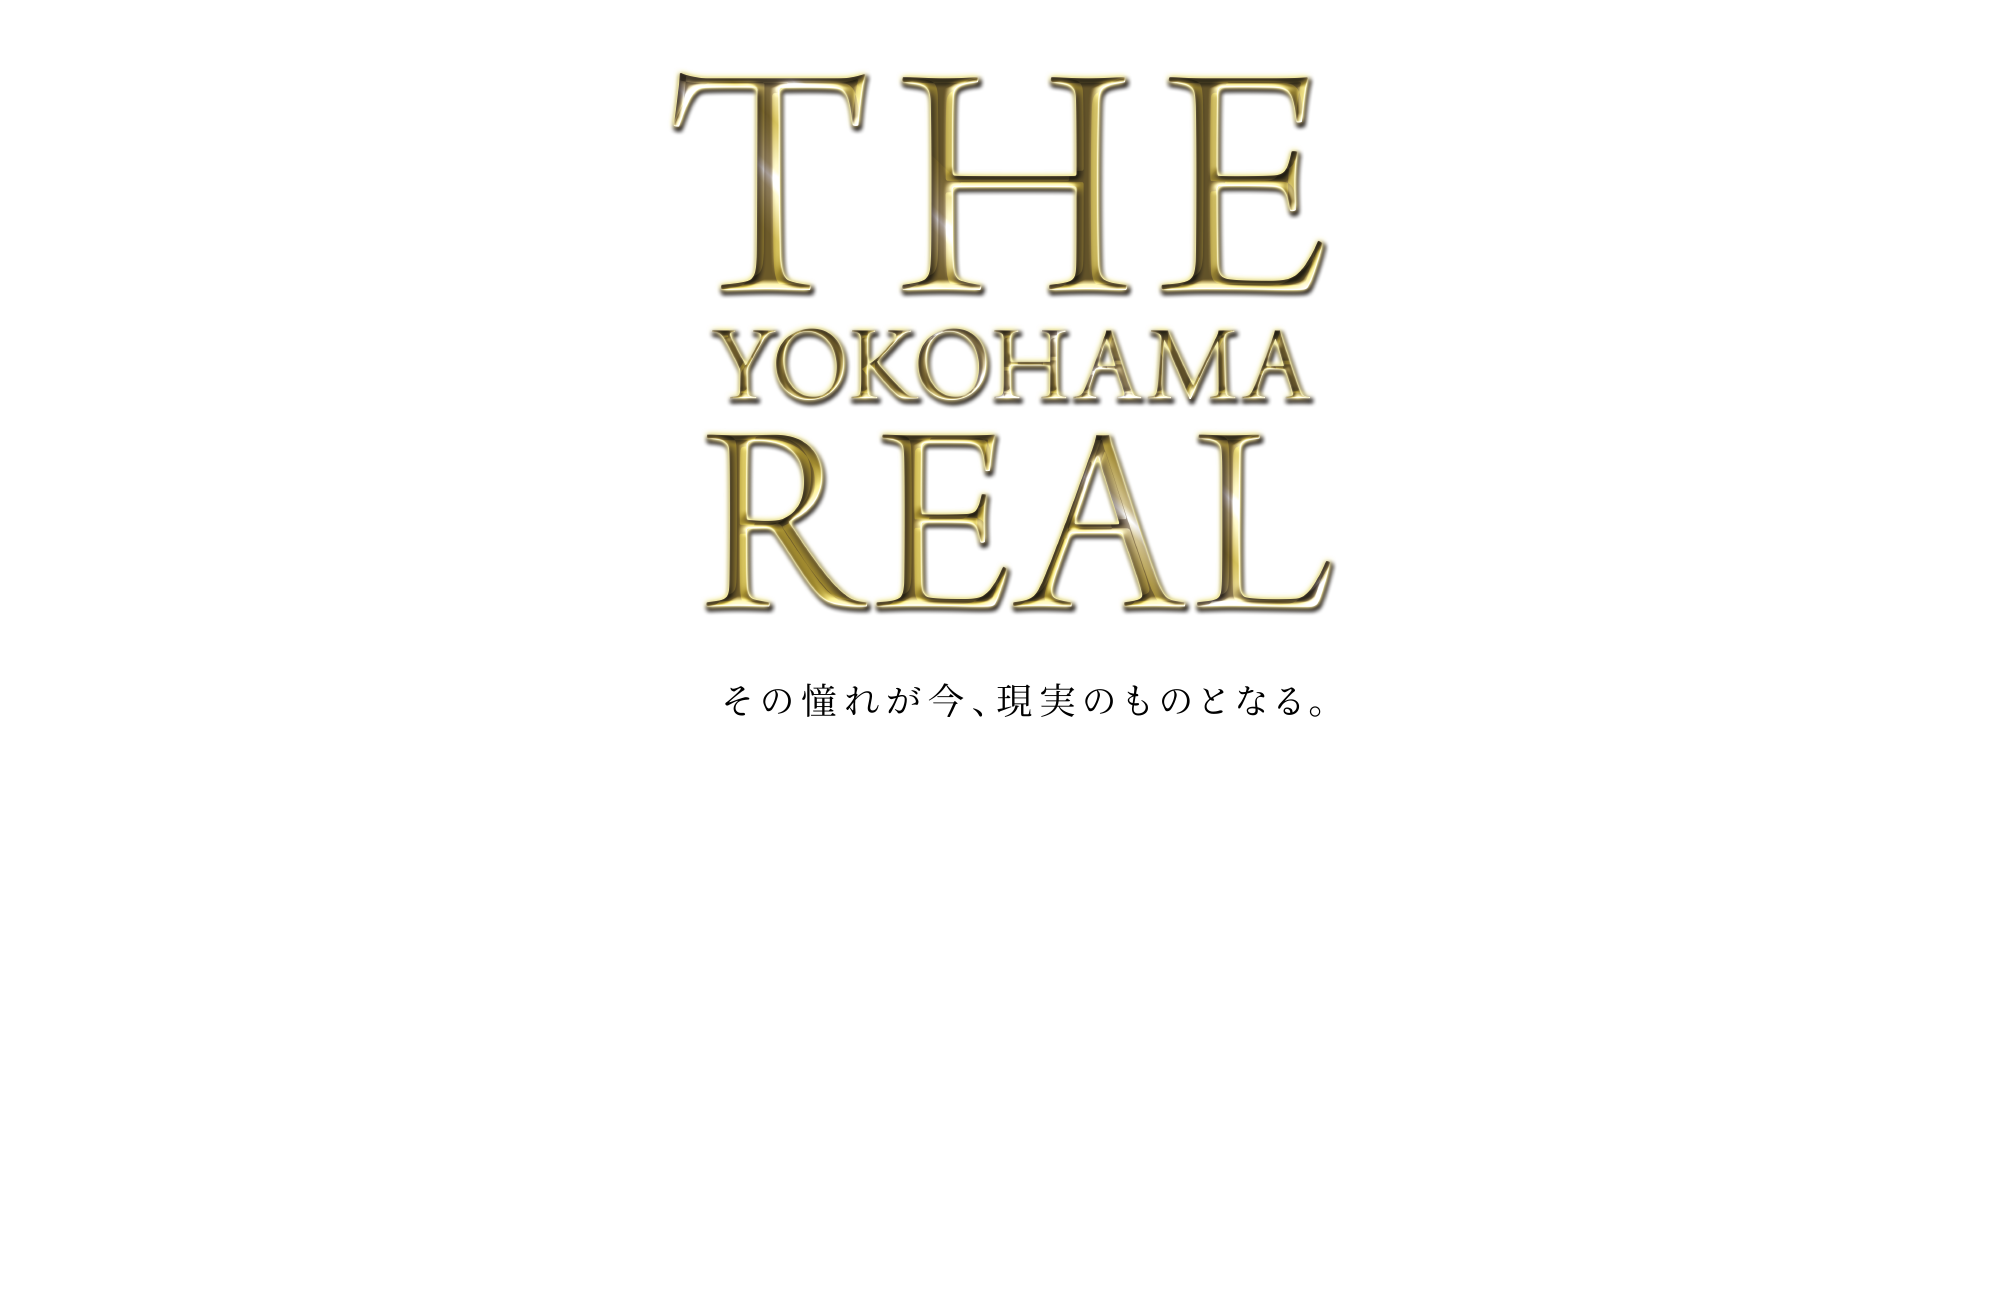 THE YOKOHAMA REAL